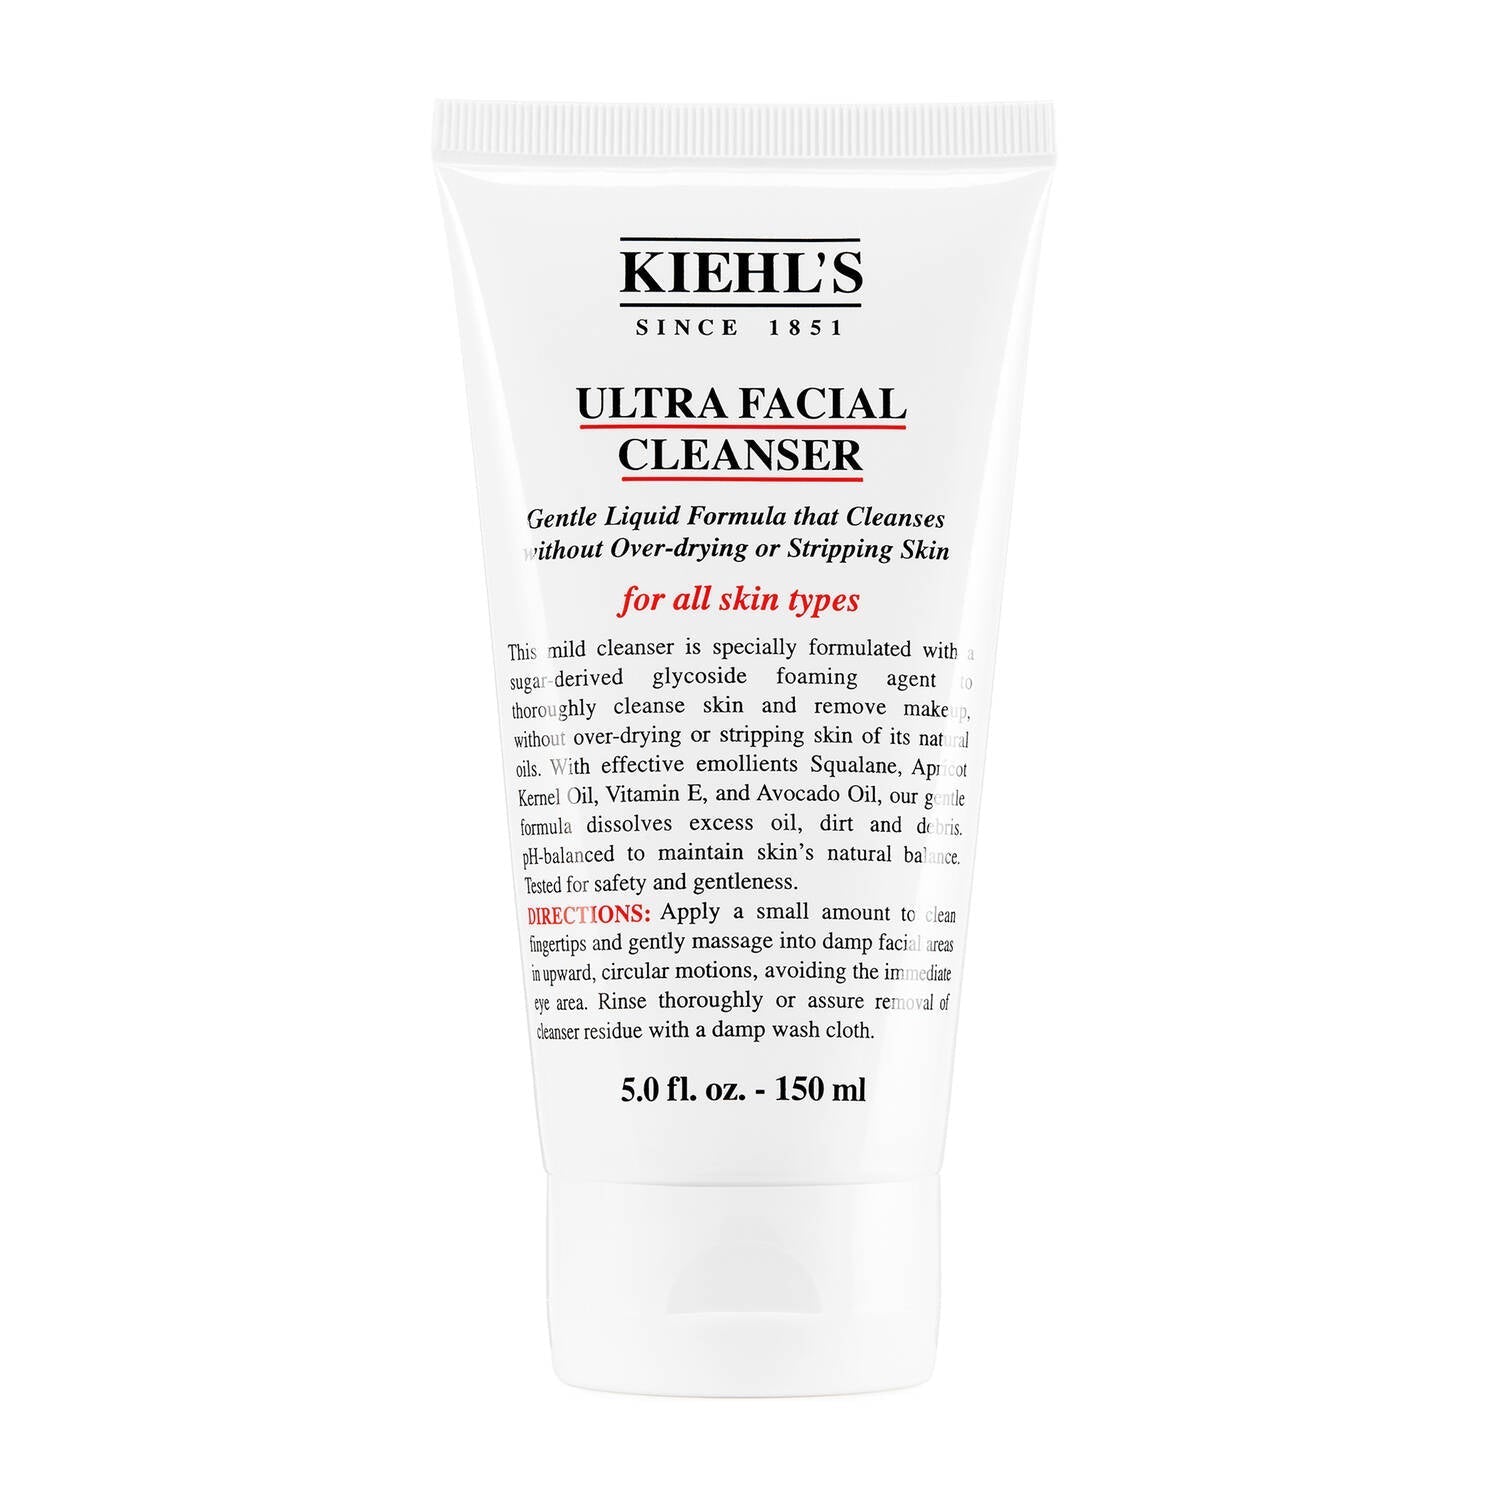 Kiehl's Ultra Facial Cleanser 150ml